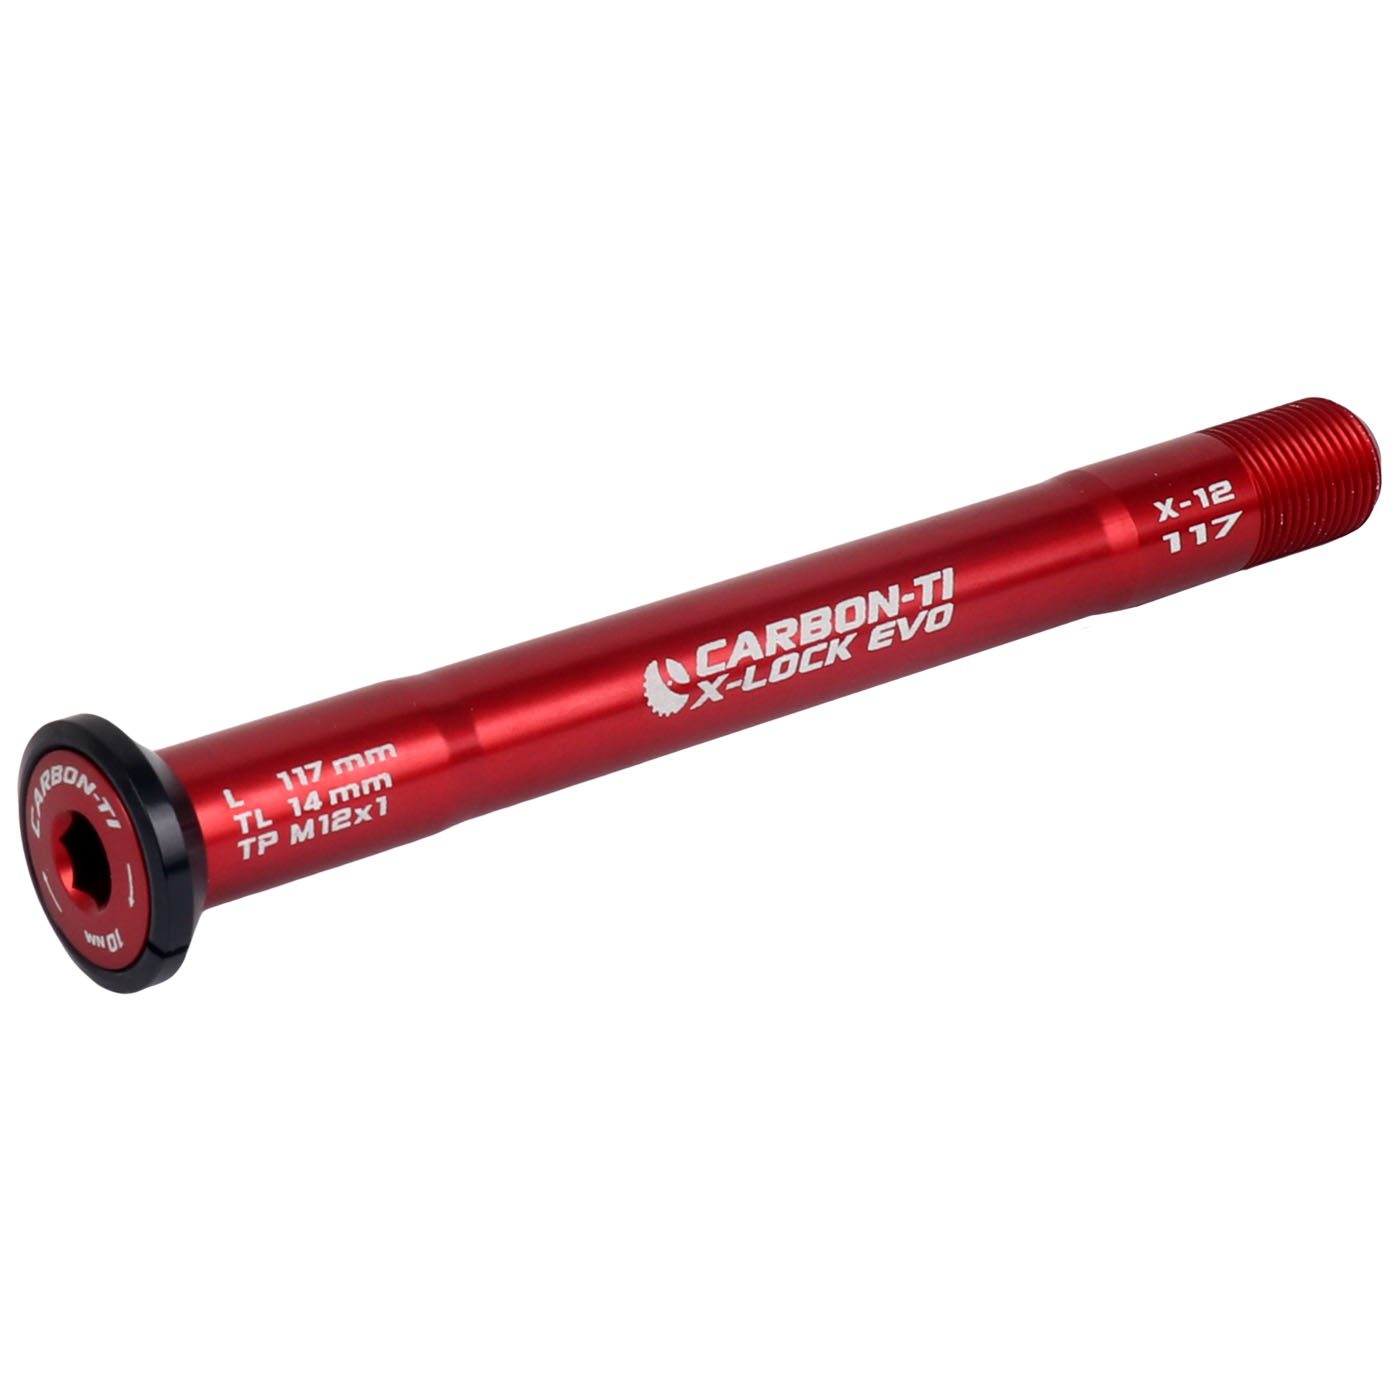 Picture of Carbon-Ti X-Lock EVO Thru Axle - 12x100mm - X-12 - M12x1.0mm - Length 117mm - red